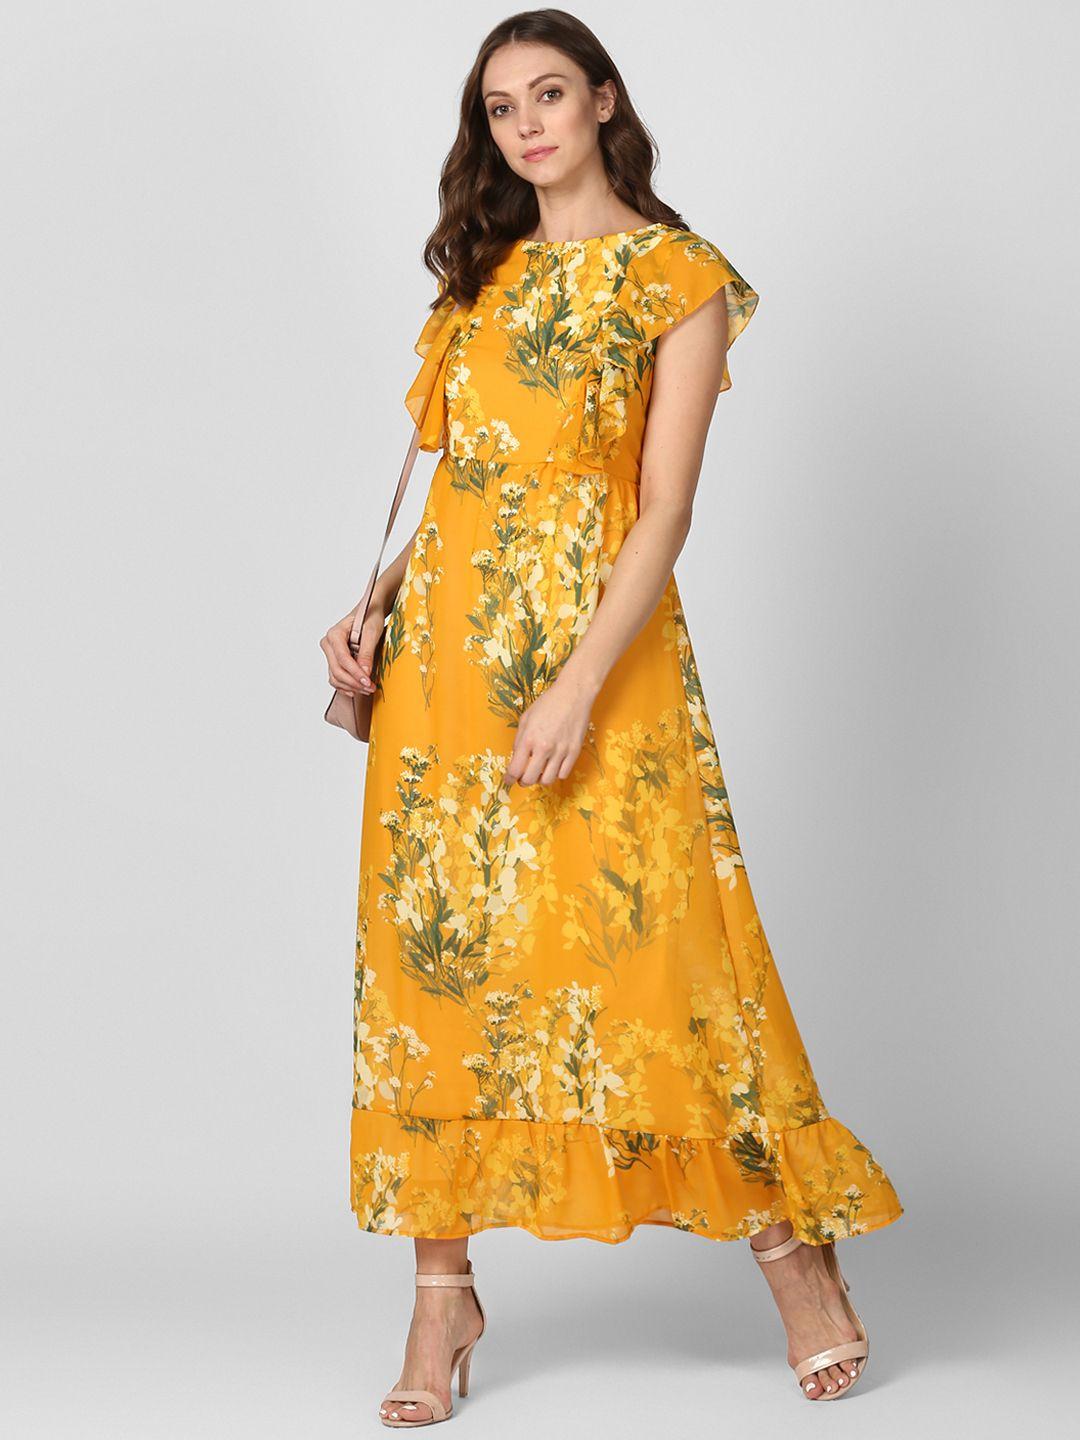 stylestone-women-floral-print-yellow-maxi-dress-with-ruffle-detail